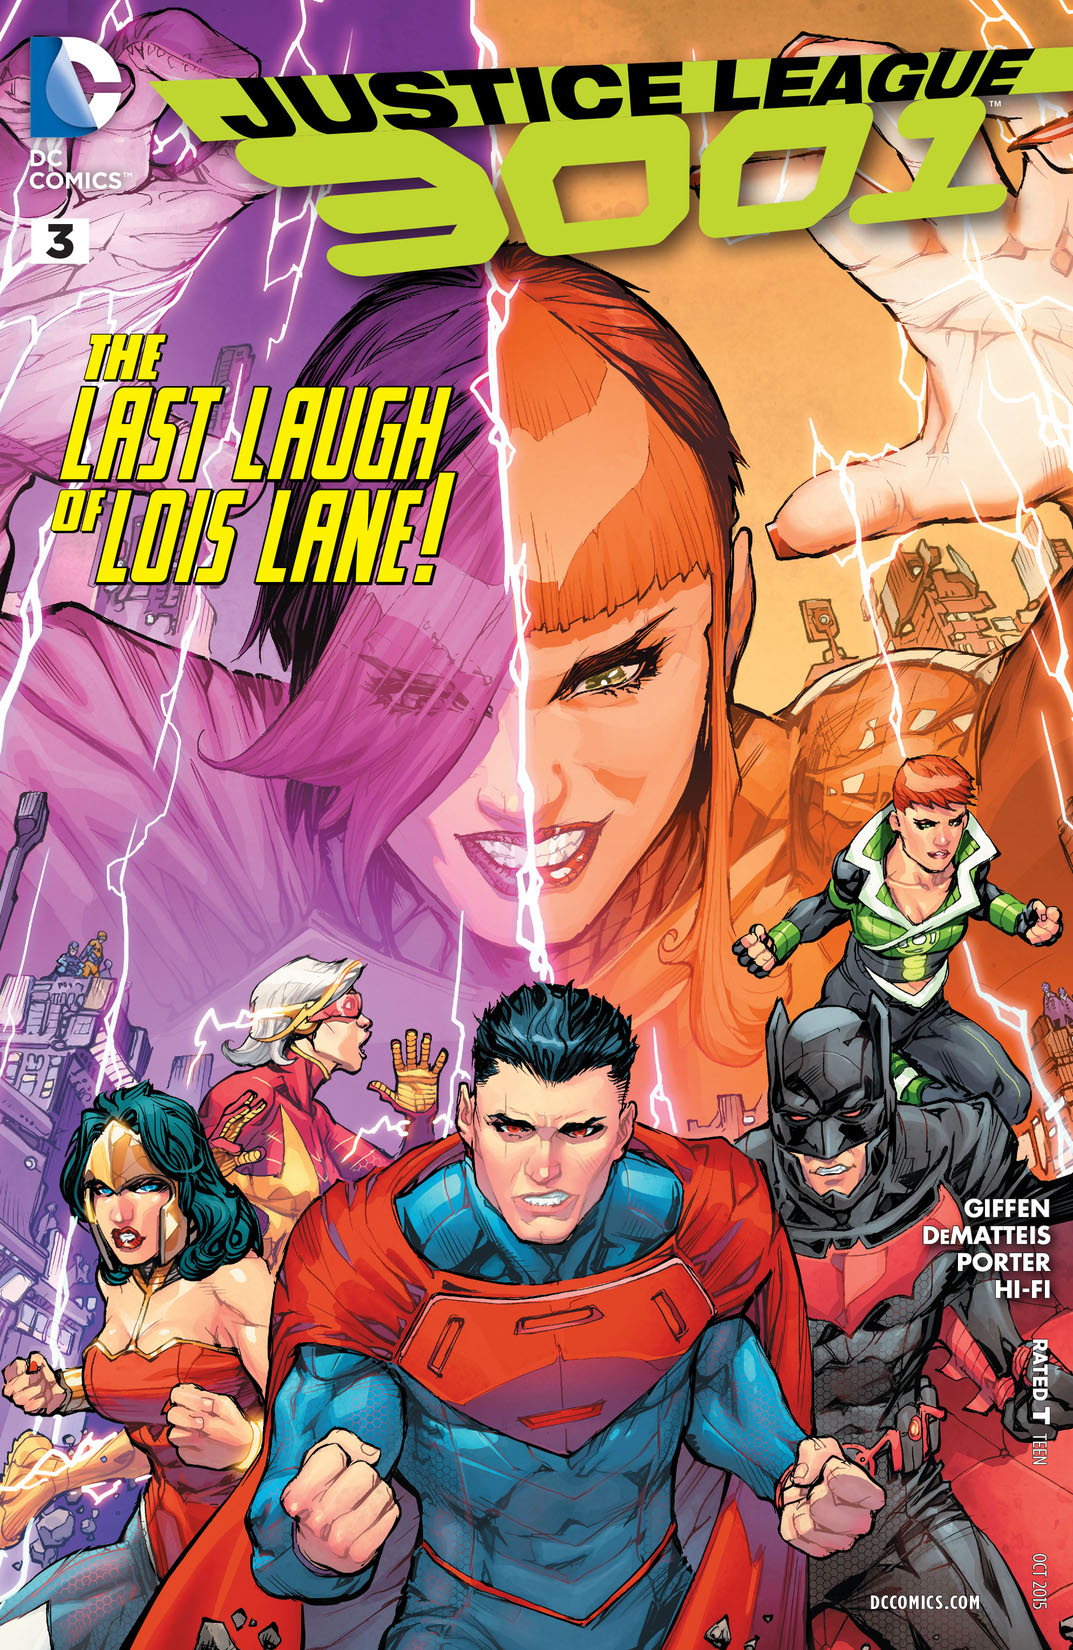 Justice League 3001 #3 preview images